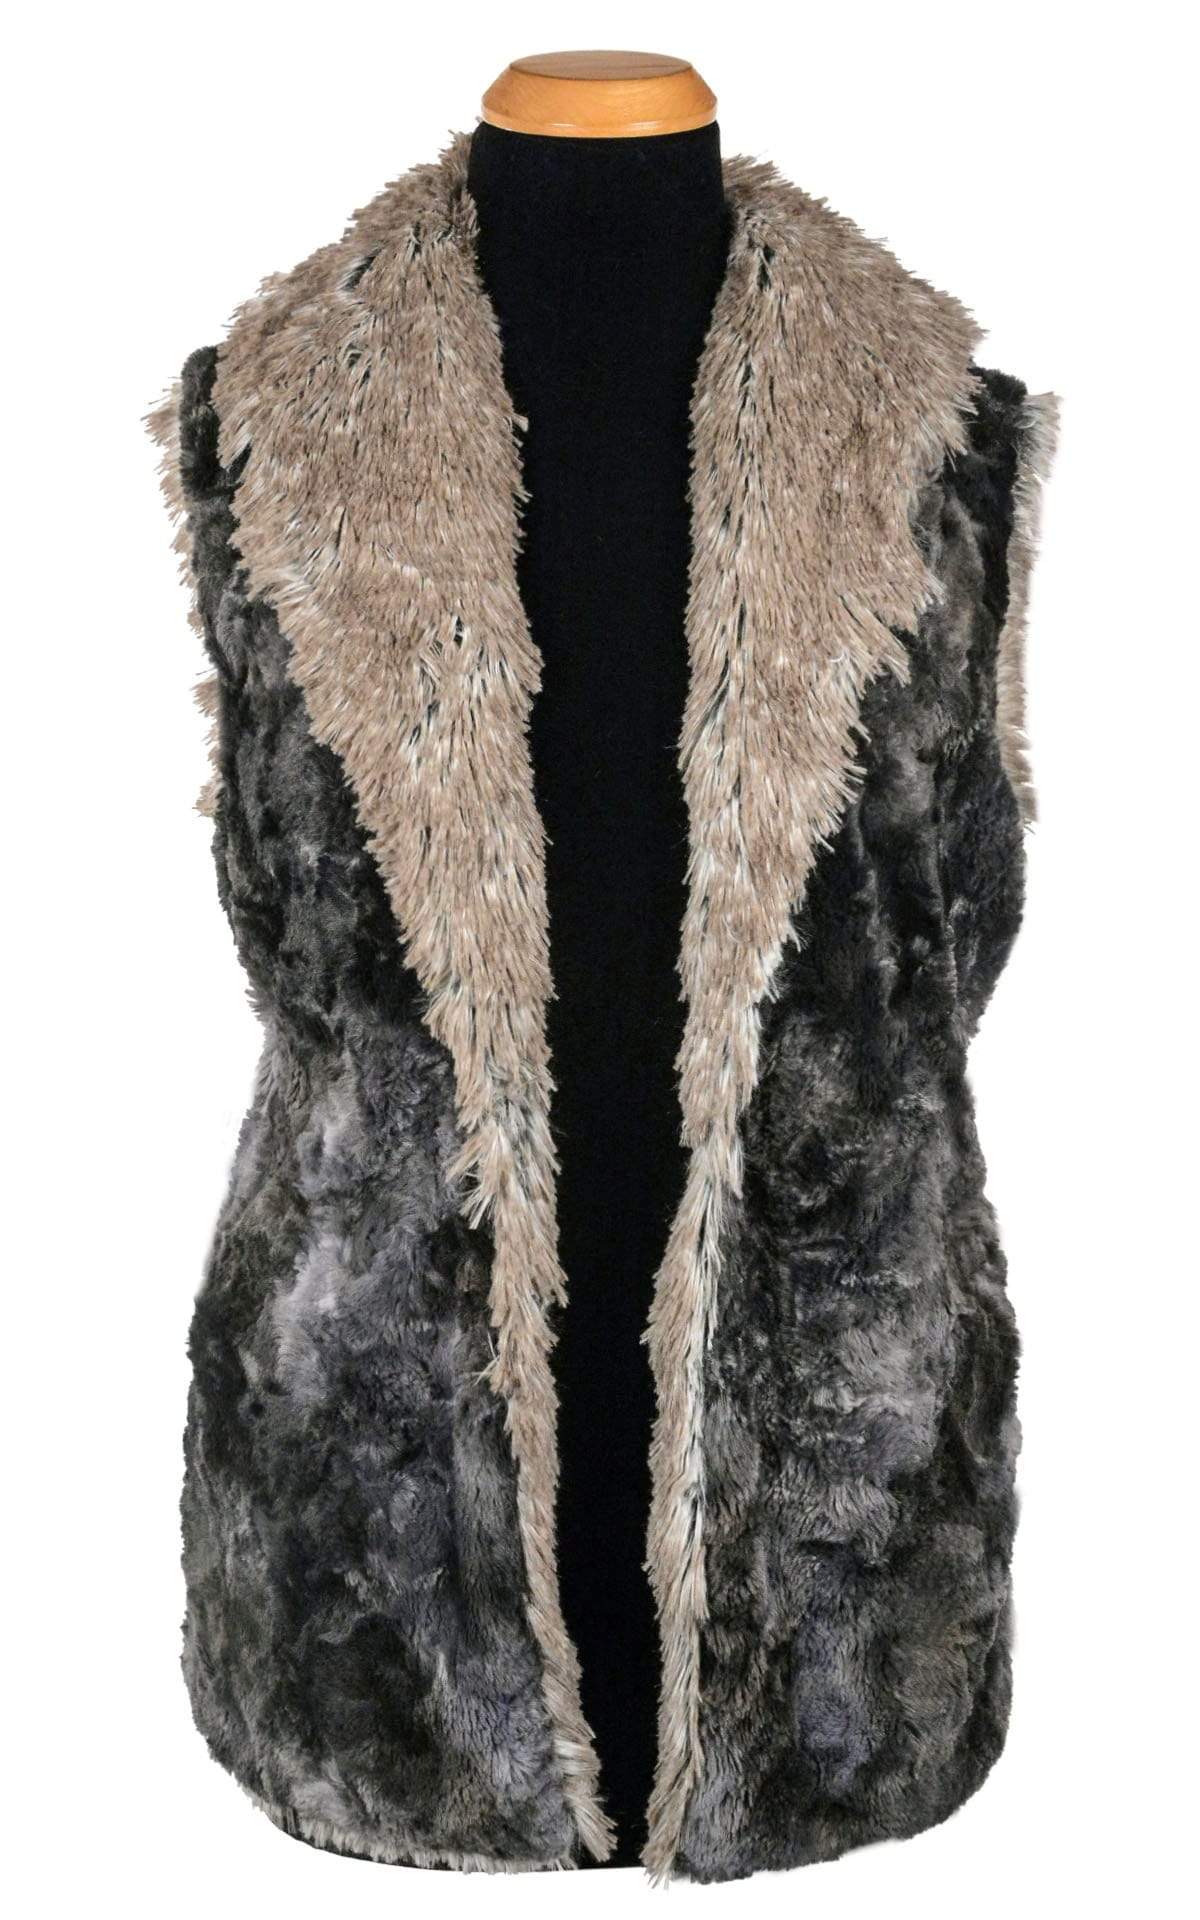 Shawl Collar Vest in Highland Skye Faux Fur lined Arctic Fox Handmade By Pandemonium Seattle USA